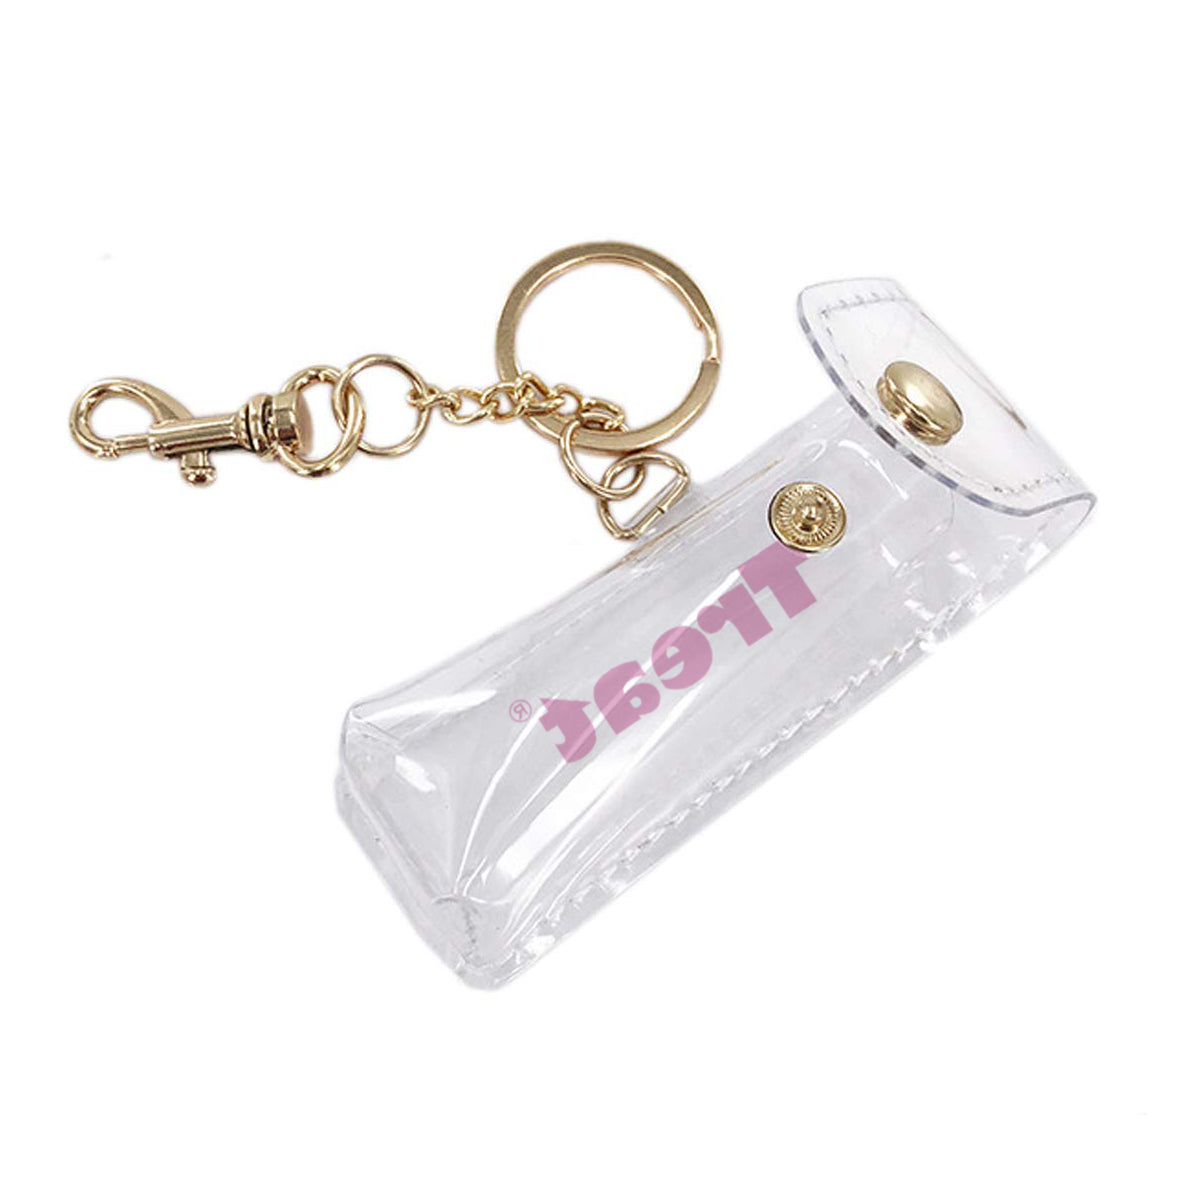 Jumbo Lip Balm Carrier with keychain